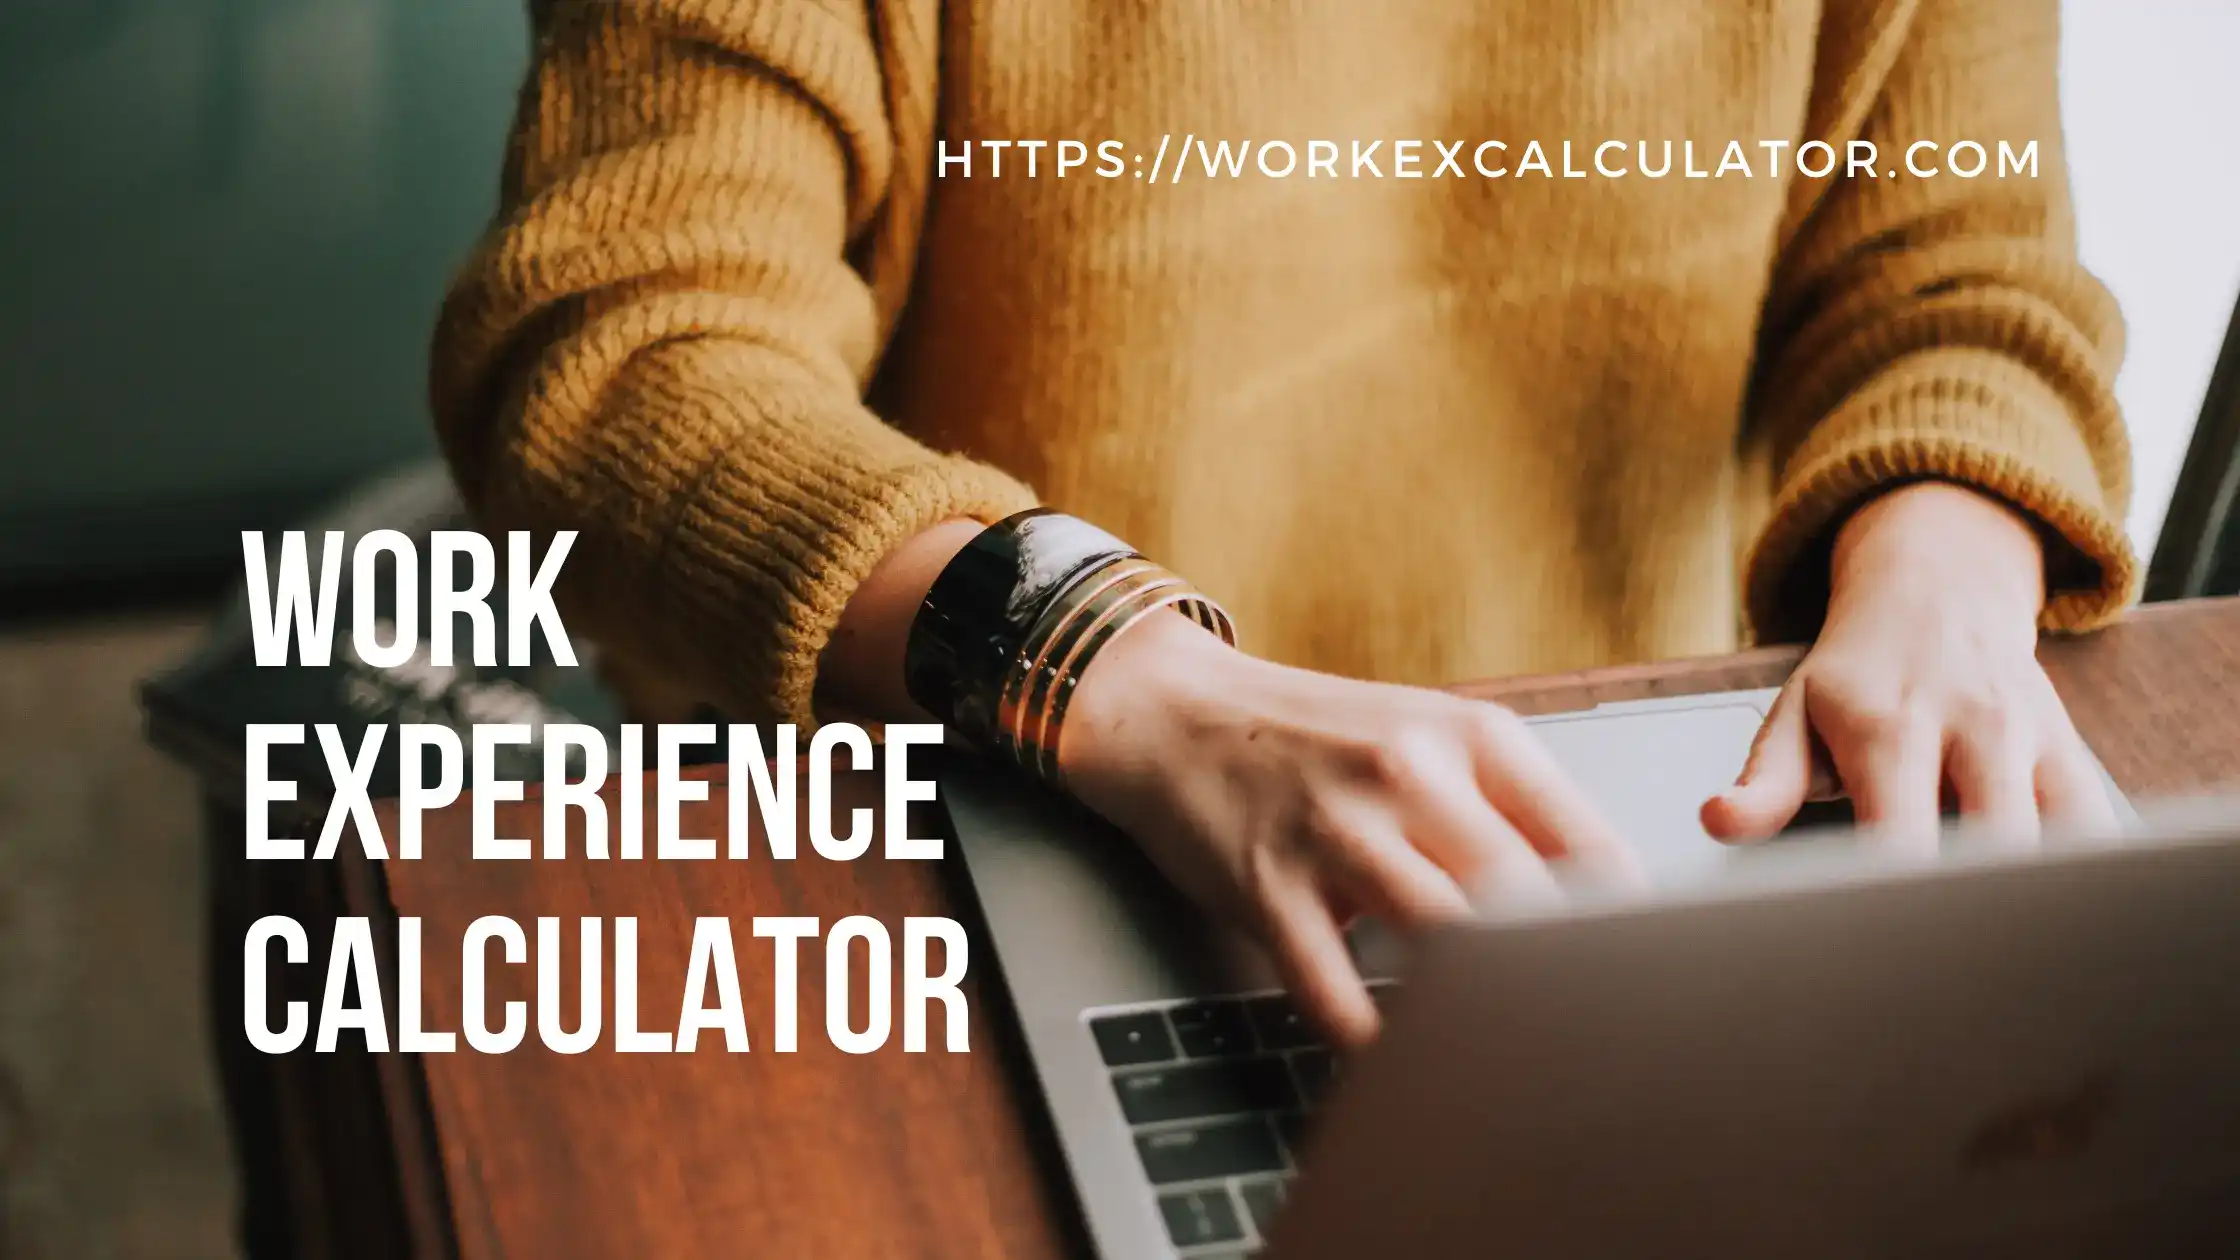 Bank work experience calculator